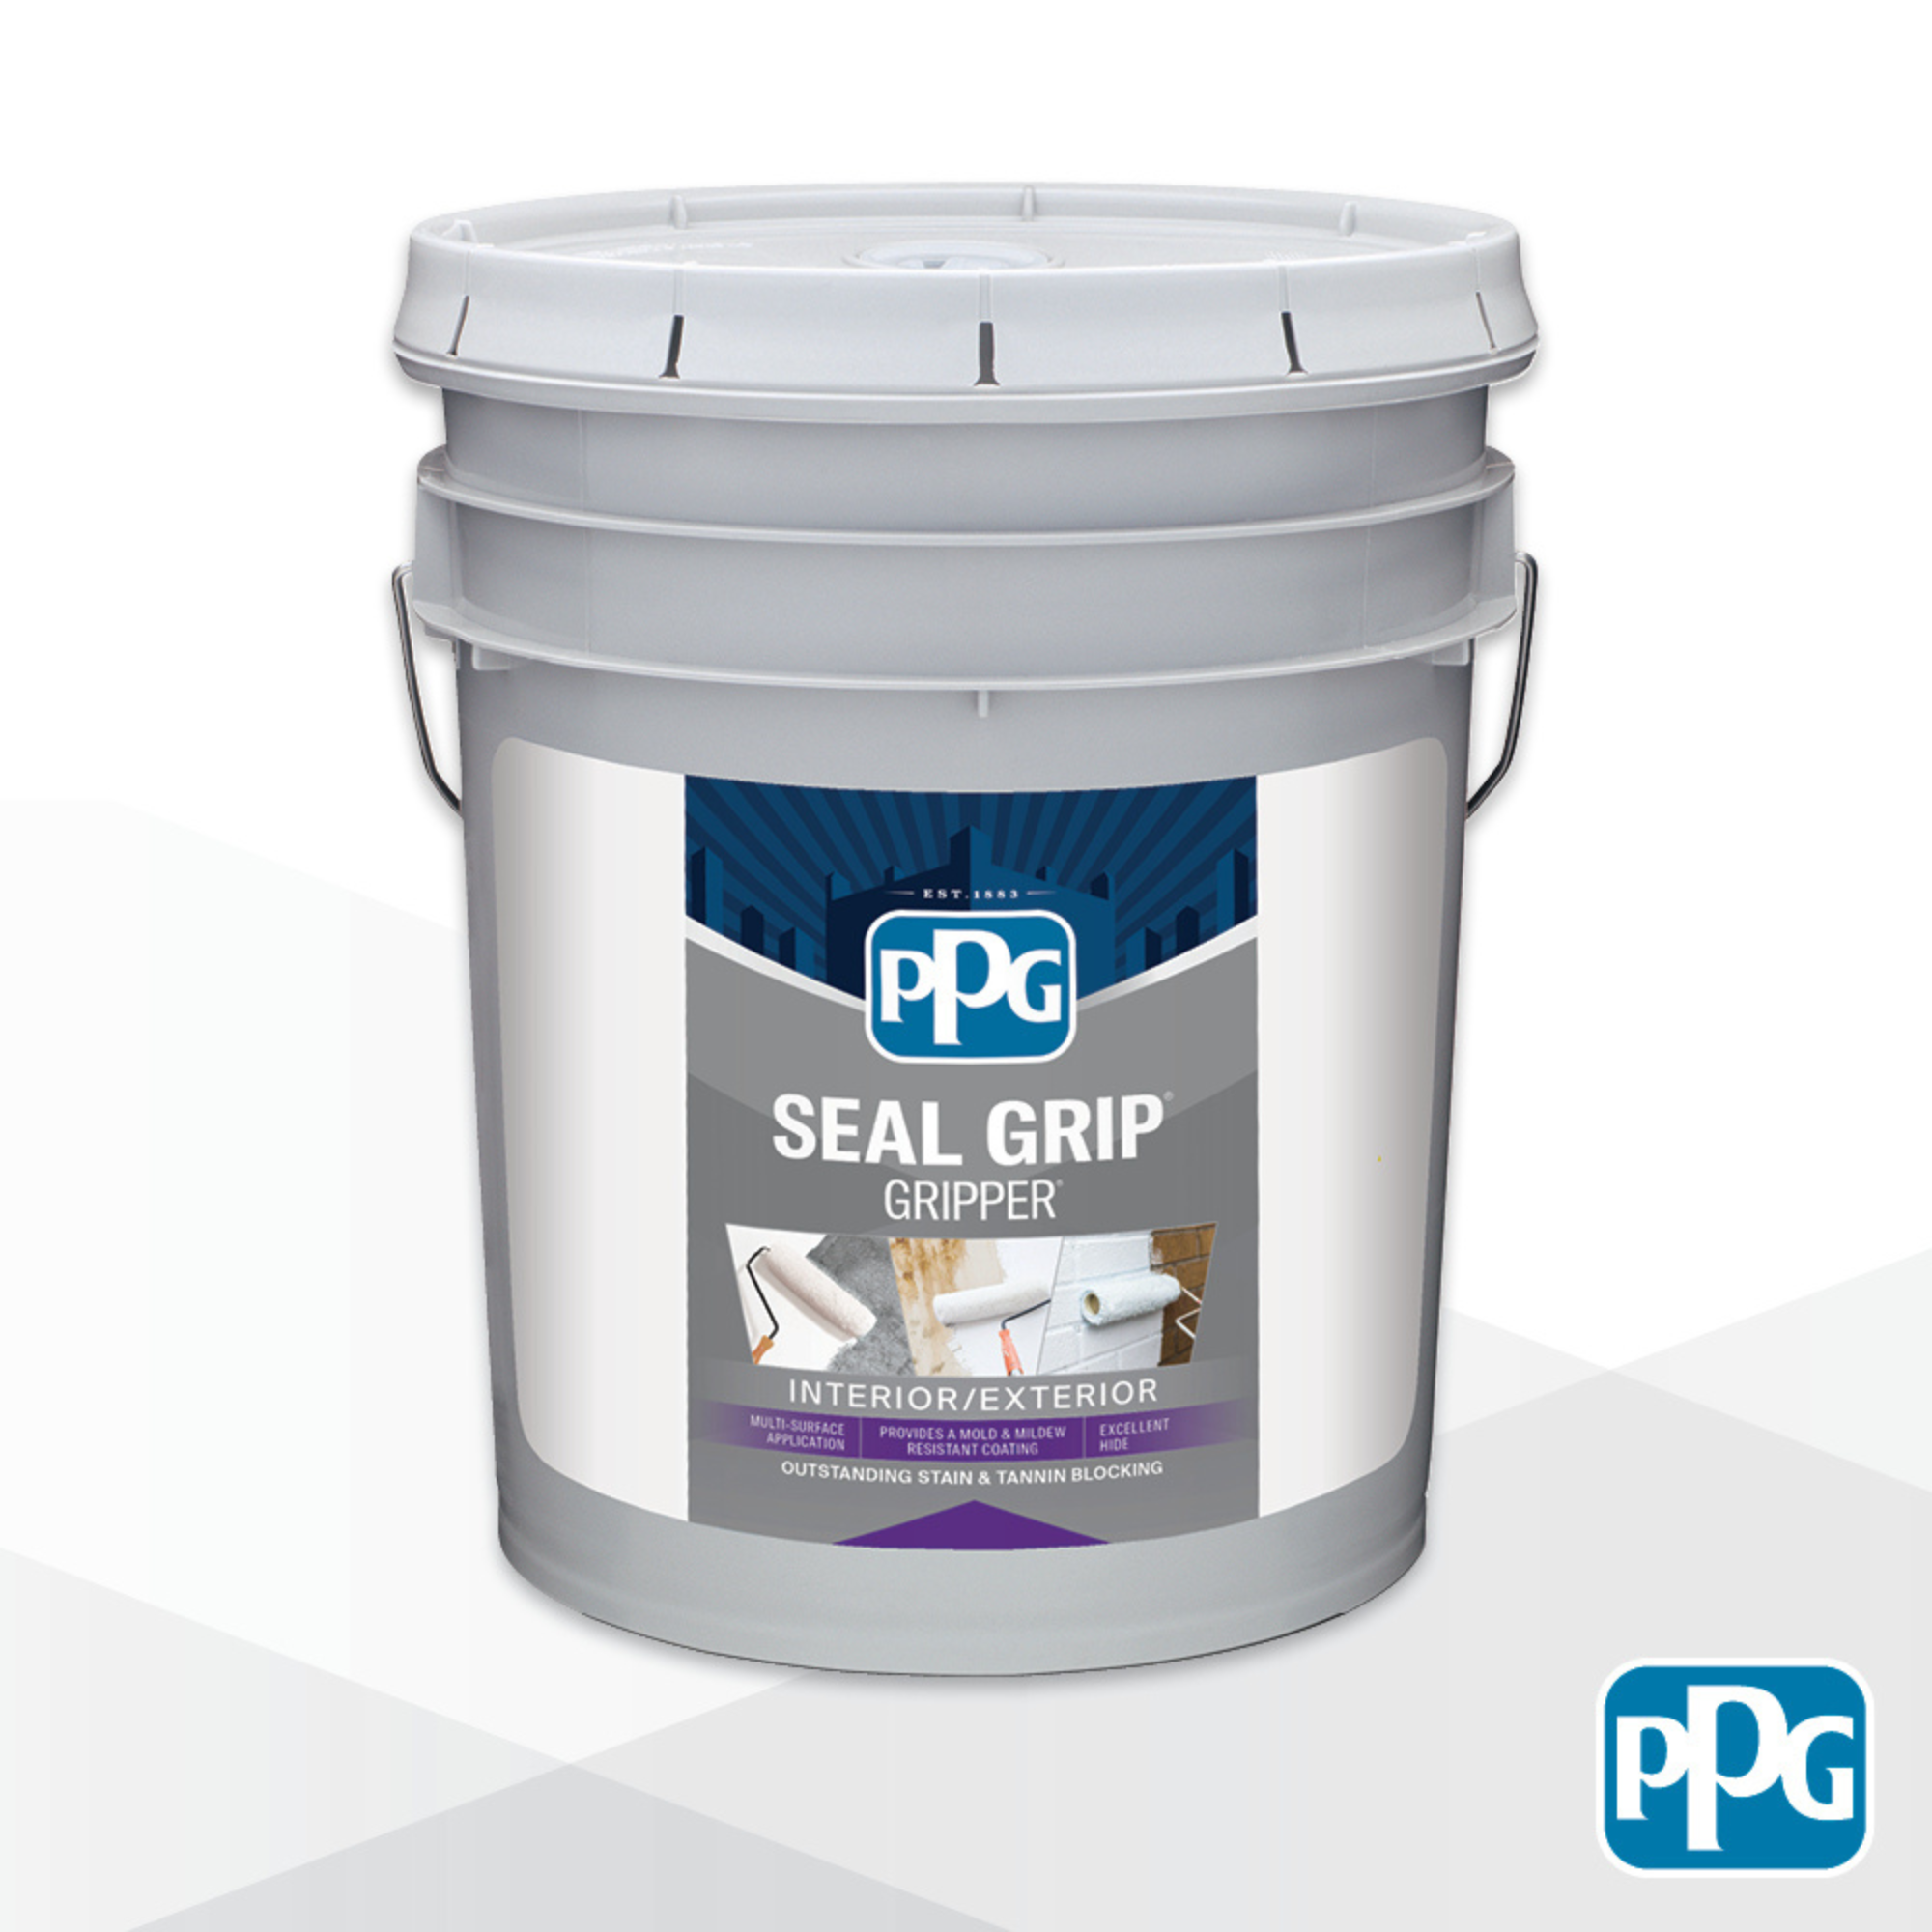 PPG® Paint Thinner (1-Gallon) – Saber Sales & Service